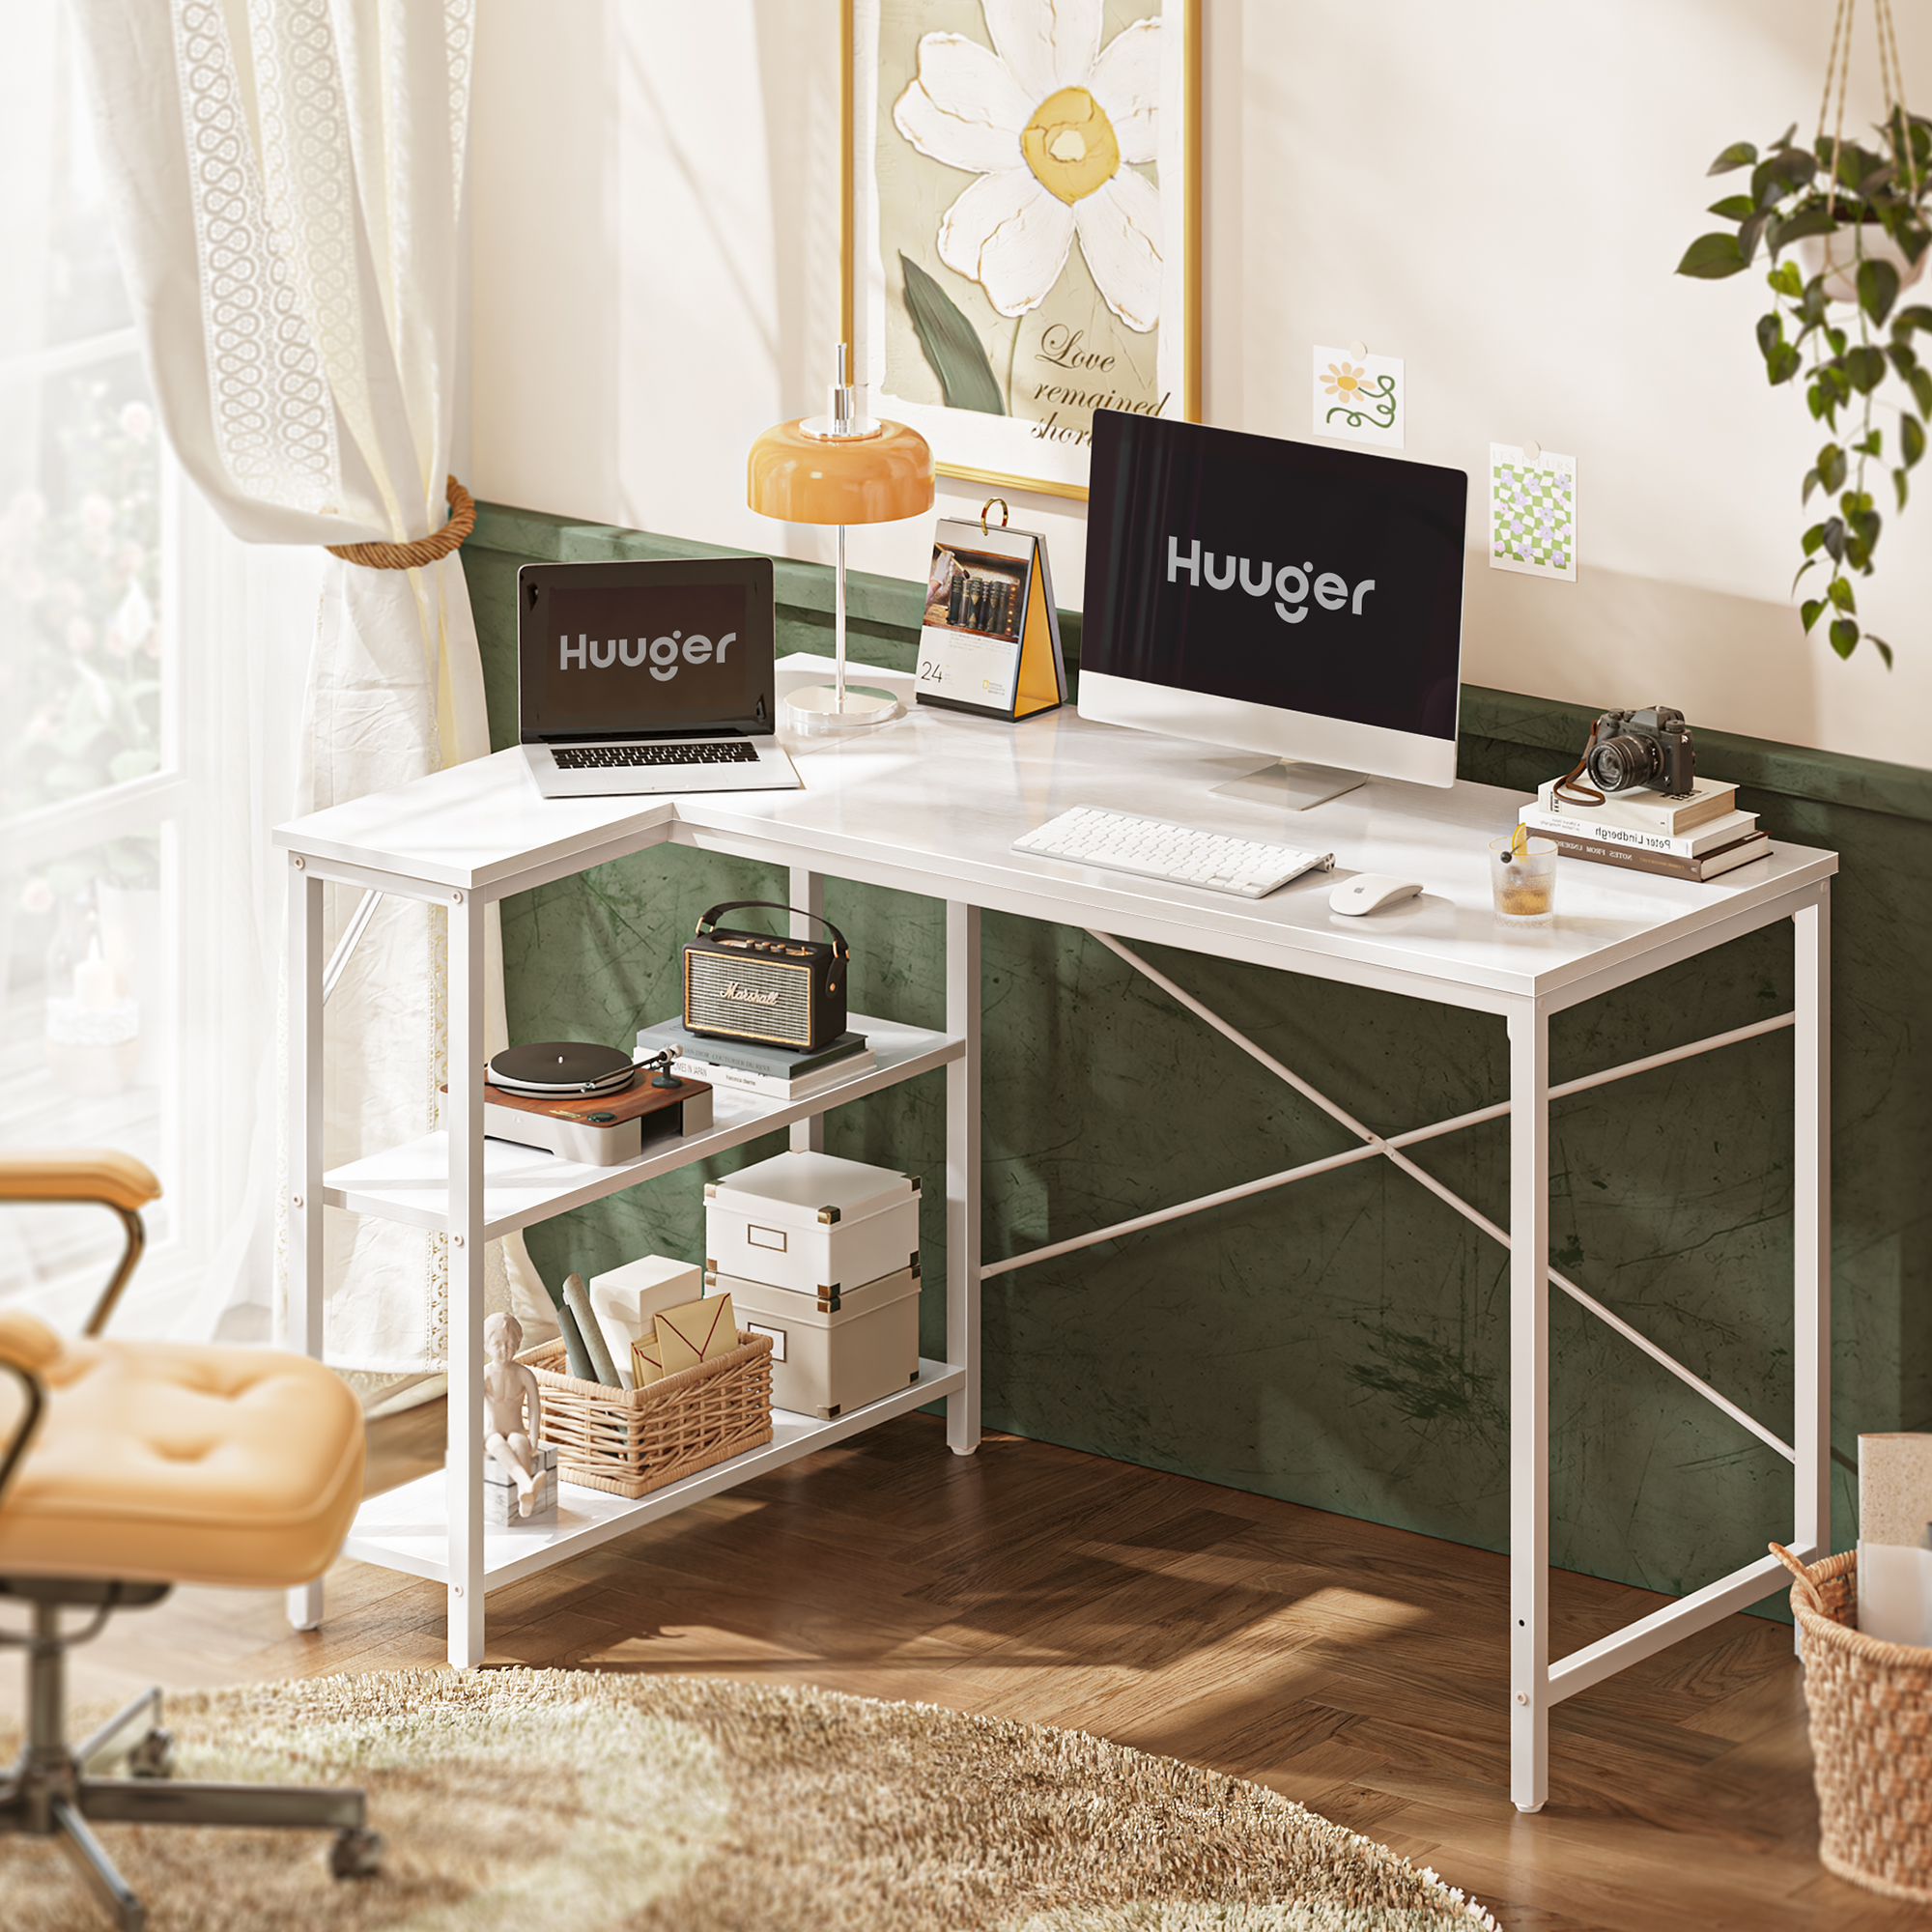 Huuger 47 inch L-Shaped Desk with Reversible Storage Shelves, Computer Desk, Gaming Desk with Metal Frame, Corner Writing Desk for Home Office, Study Desk, White - image 5 of 8